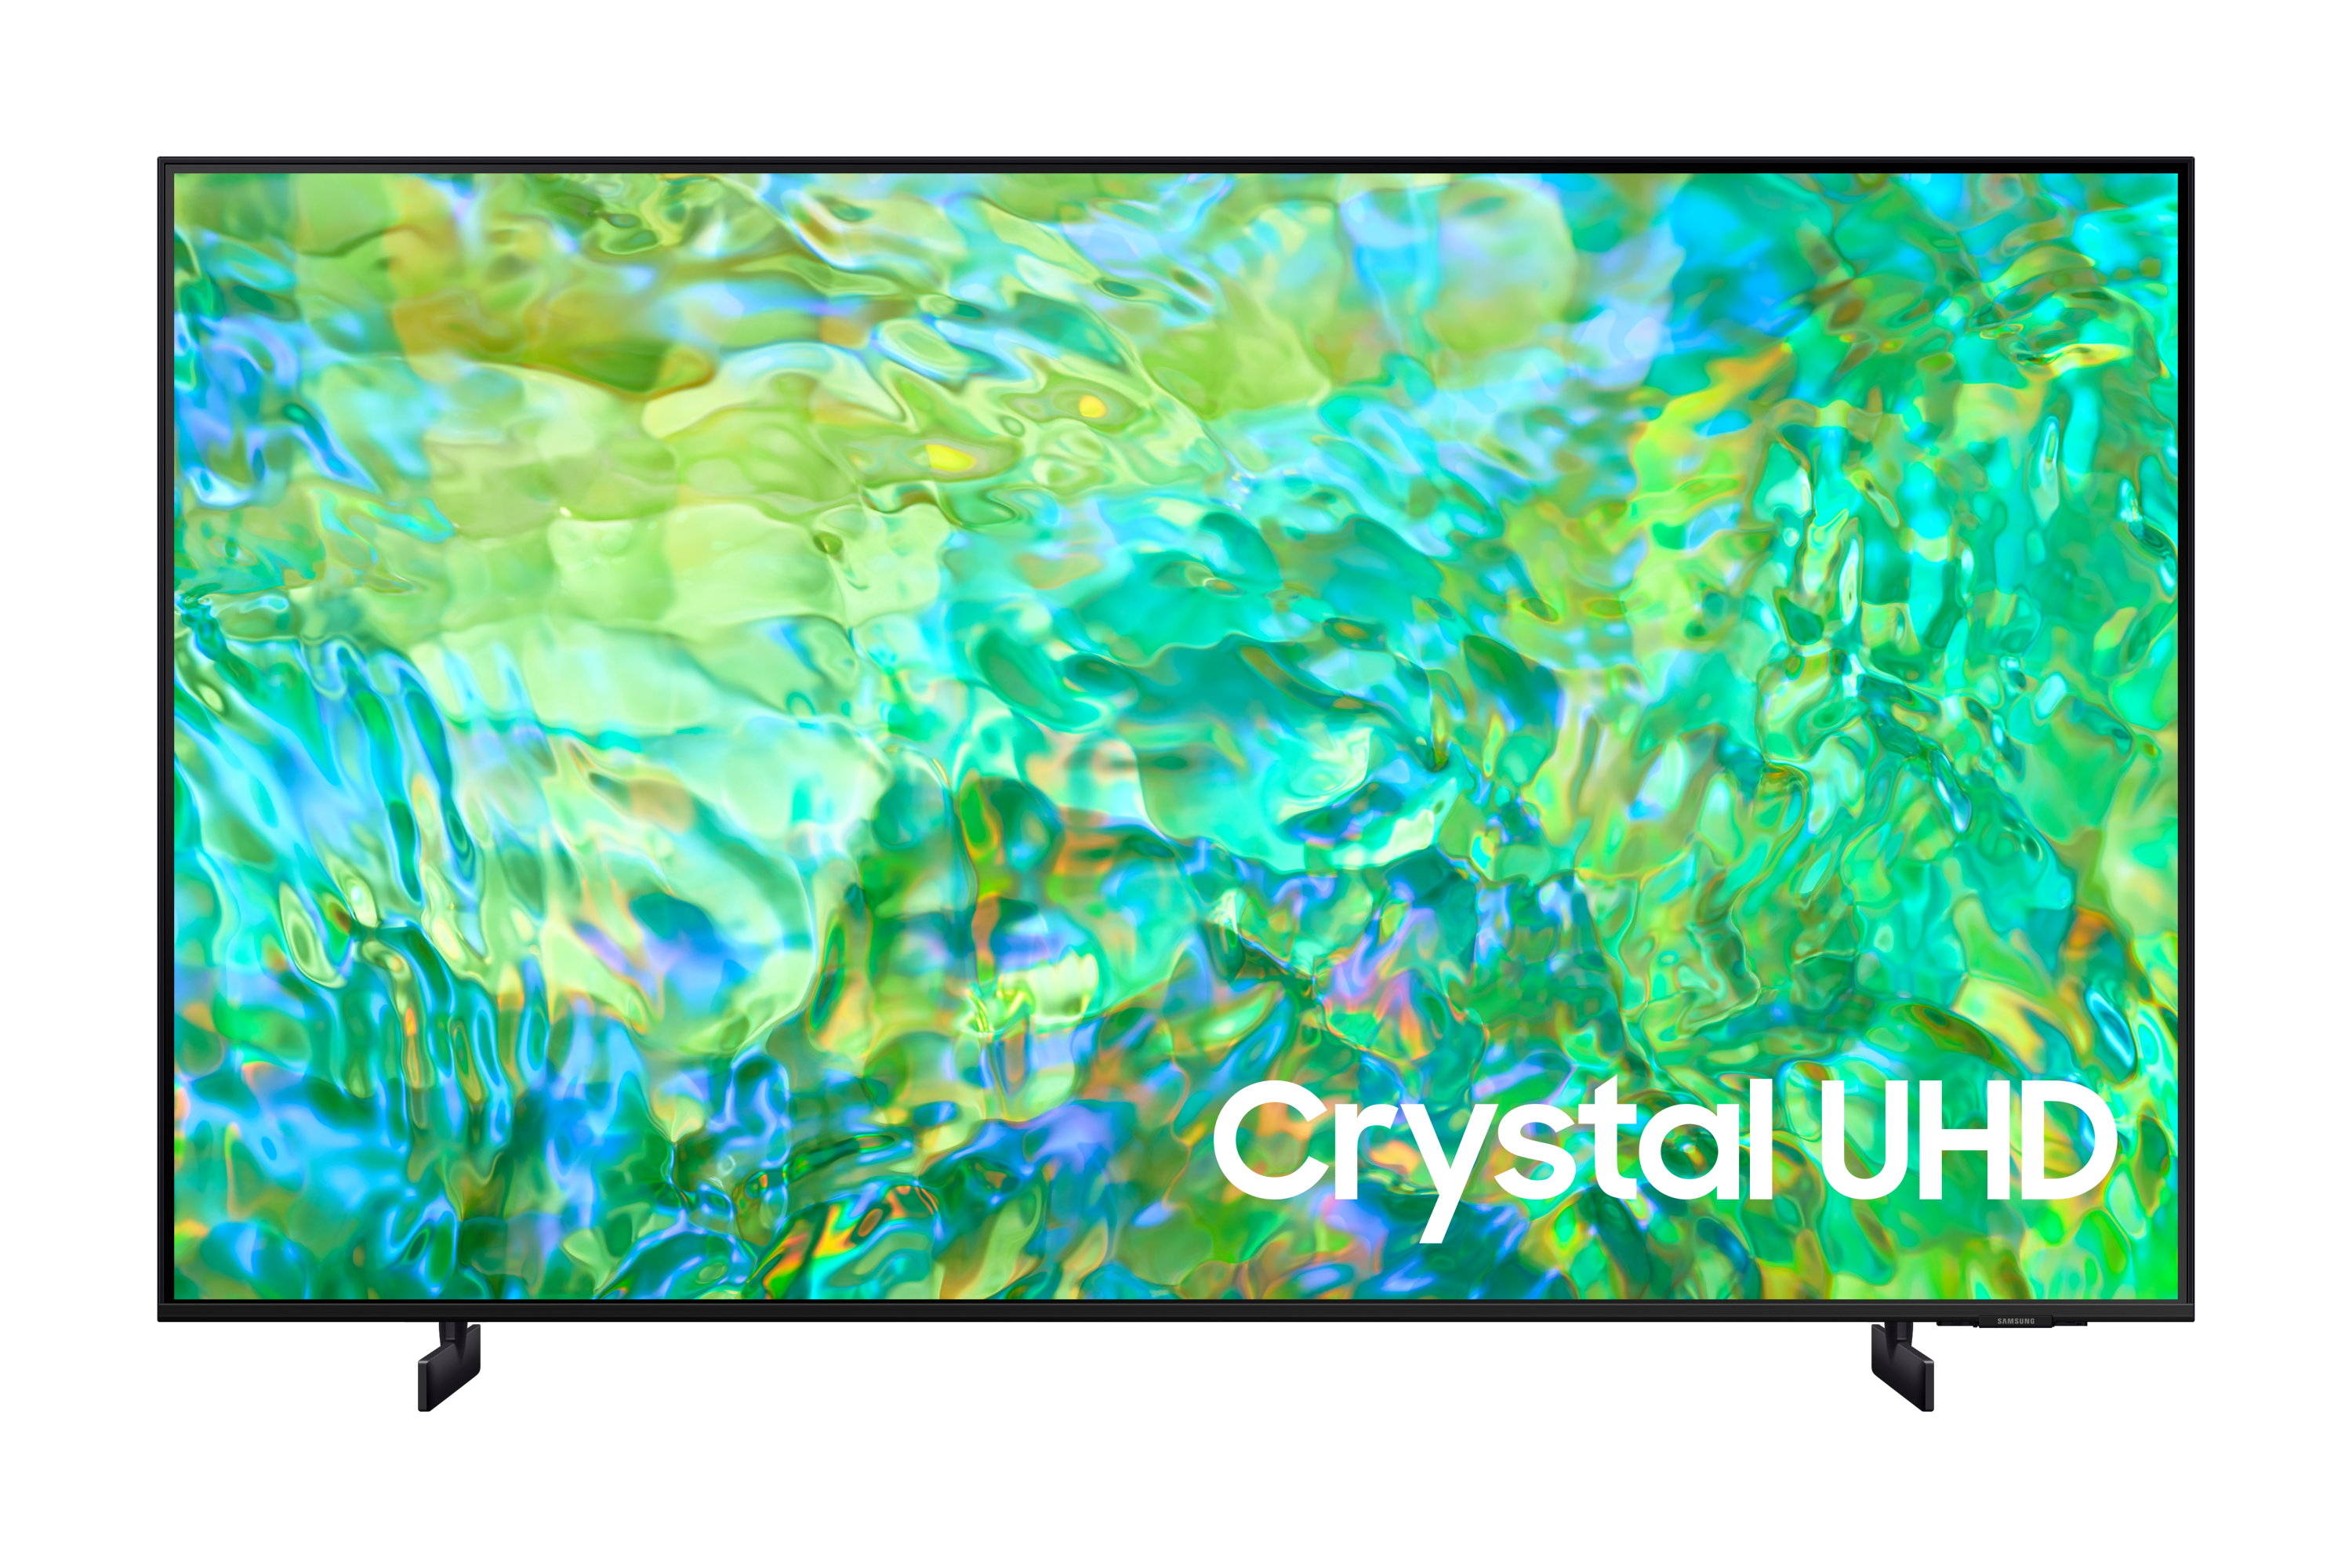 Samsung - TV LED 138cm (55") TU55CU8000K Procesador Crystal UHD 4K Smart TV - Negro